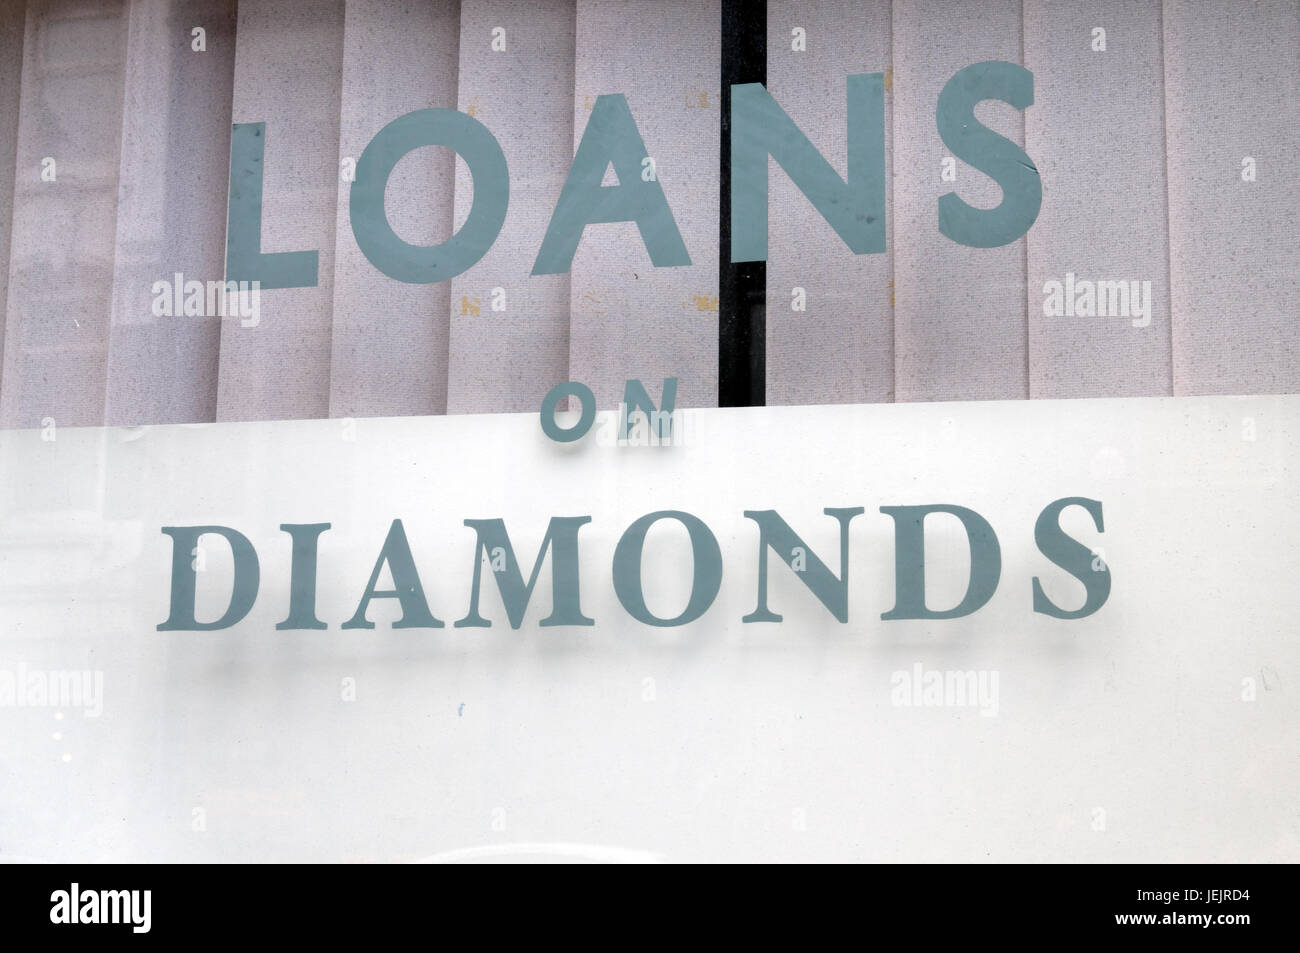 Loan on Diamonds shop front. Stock Photo